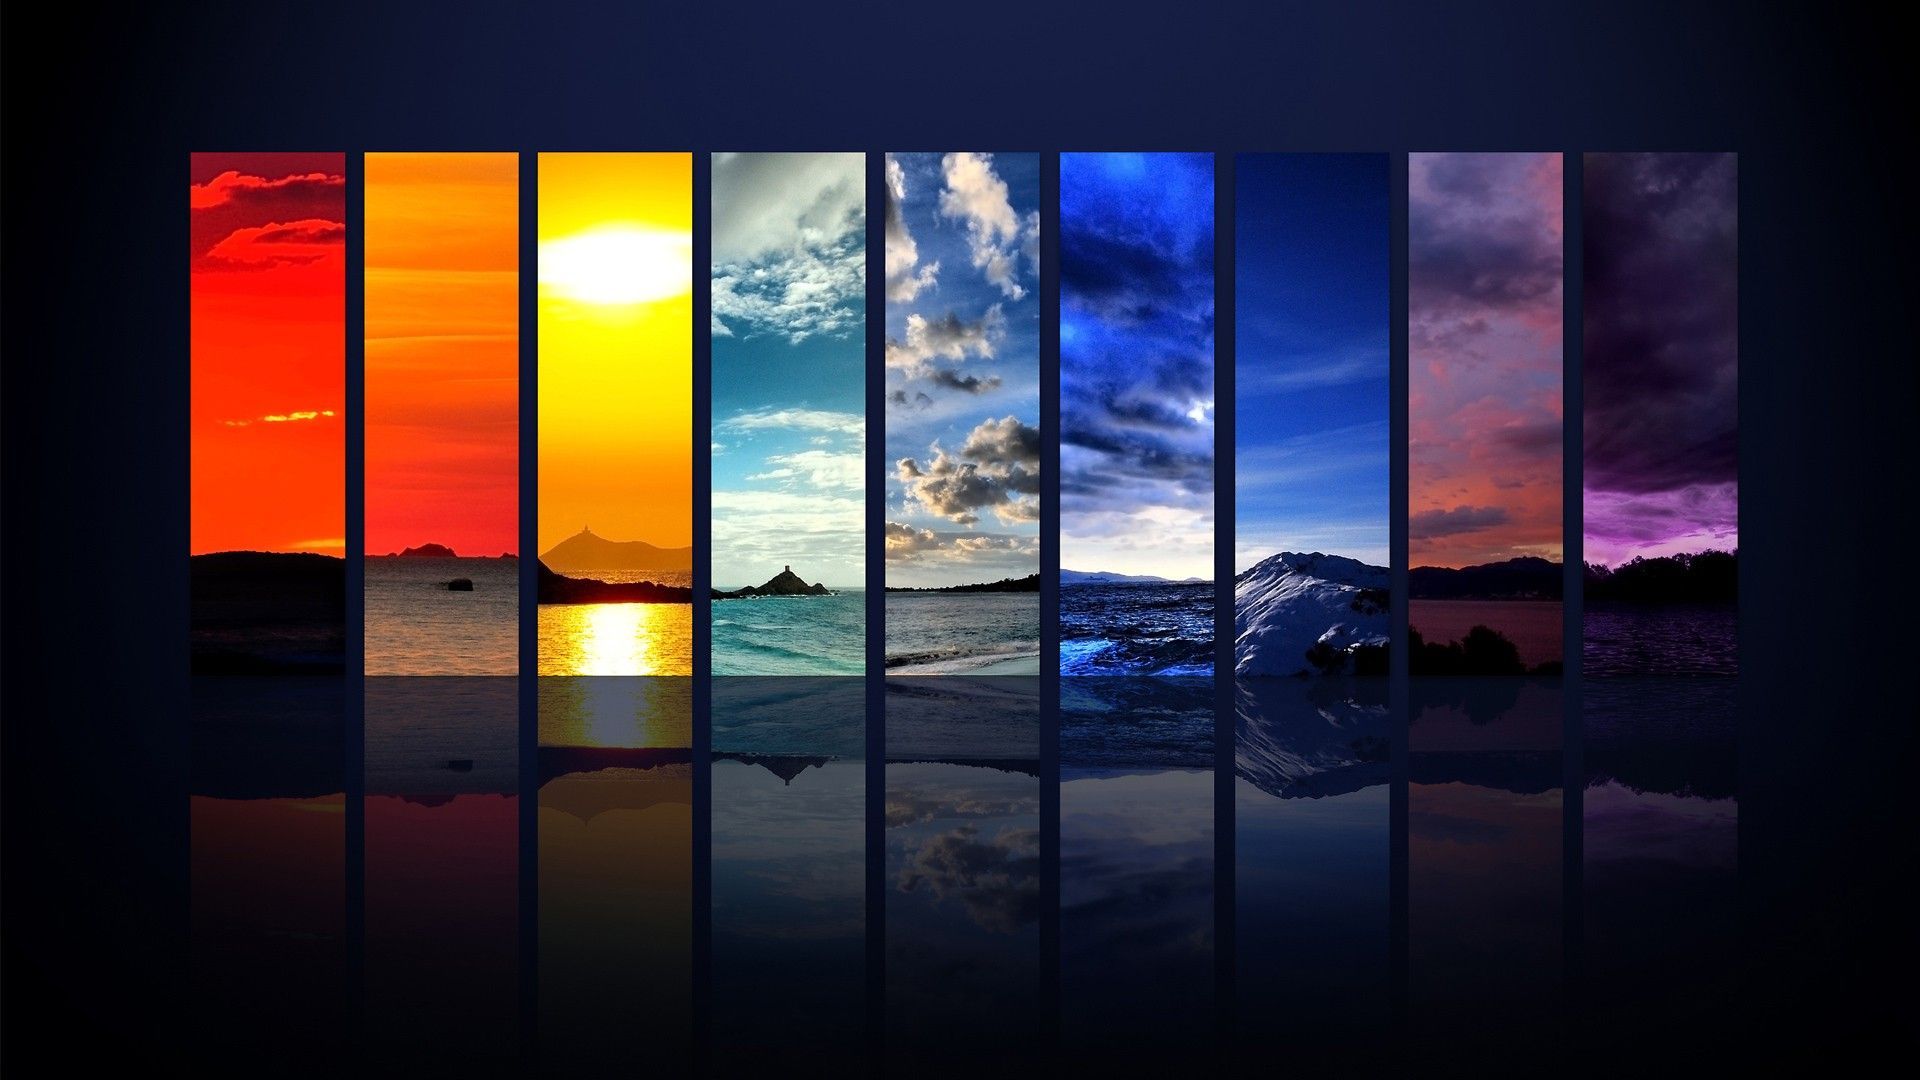 30+ Awesome Desktop Backgrounds - Creative GAG